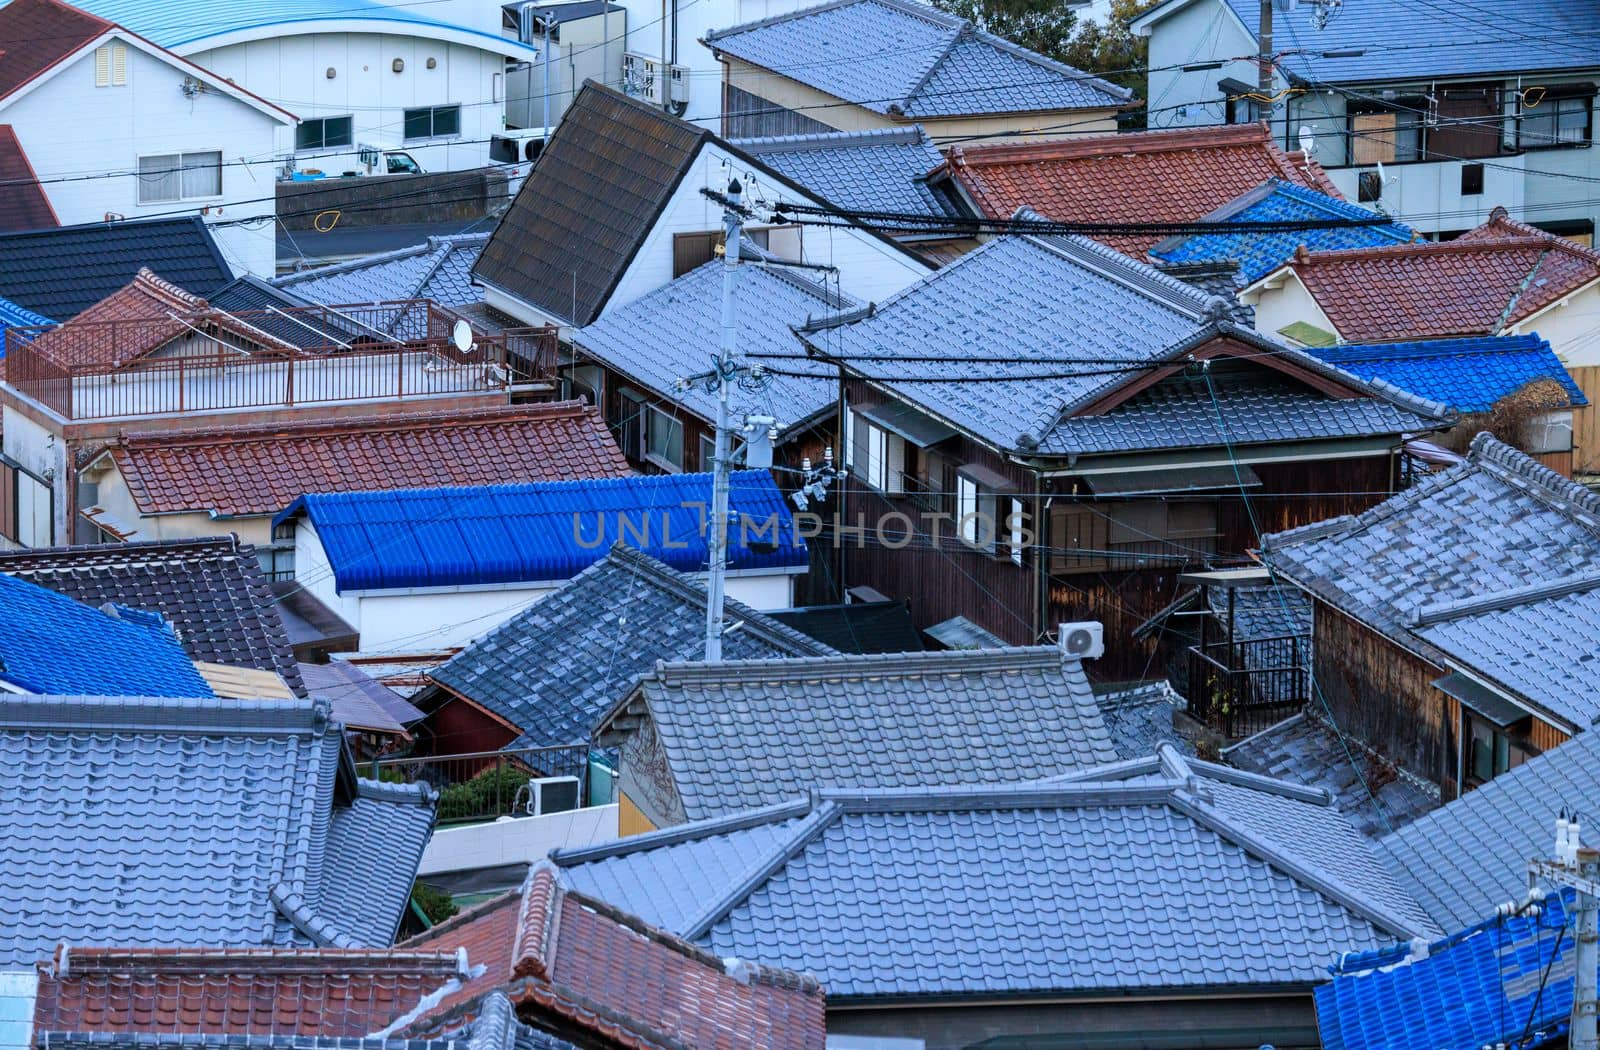 Tiled Roofs on Houses of Dense Residential Neighborhood in Japanese Town by Osaze